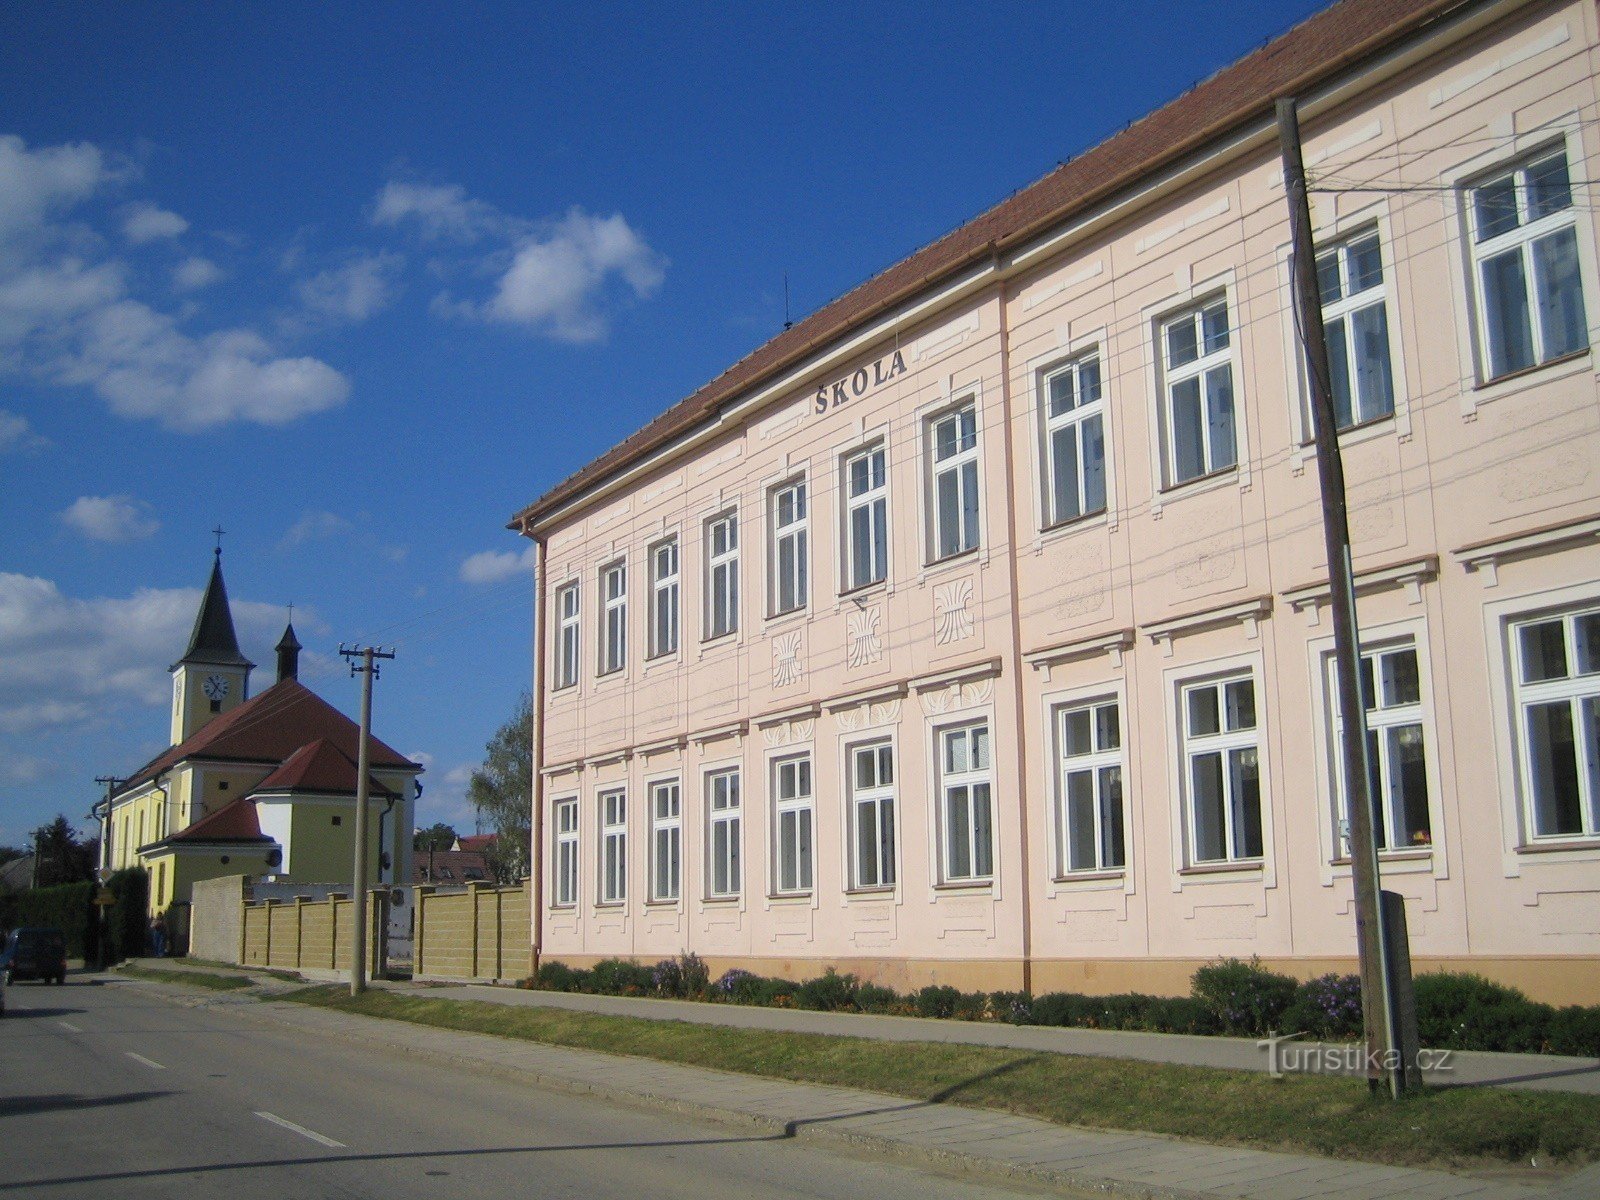 Topolná - school and church